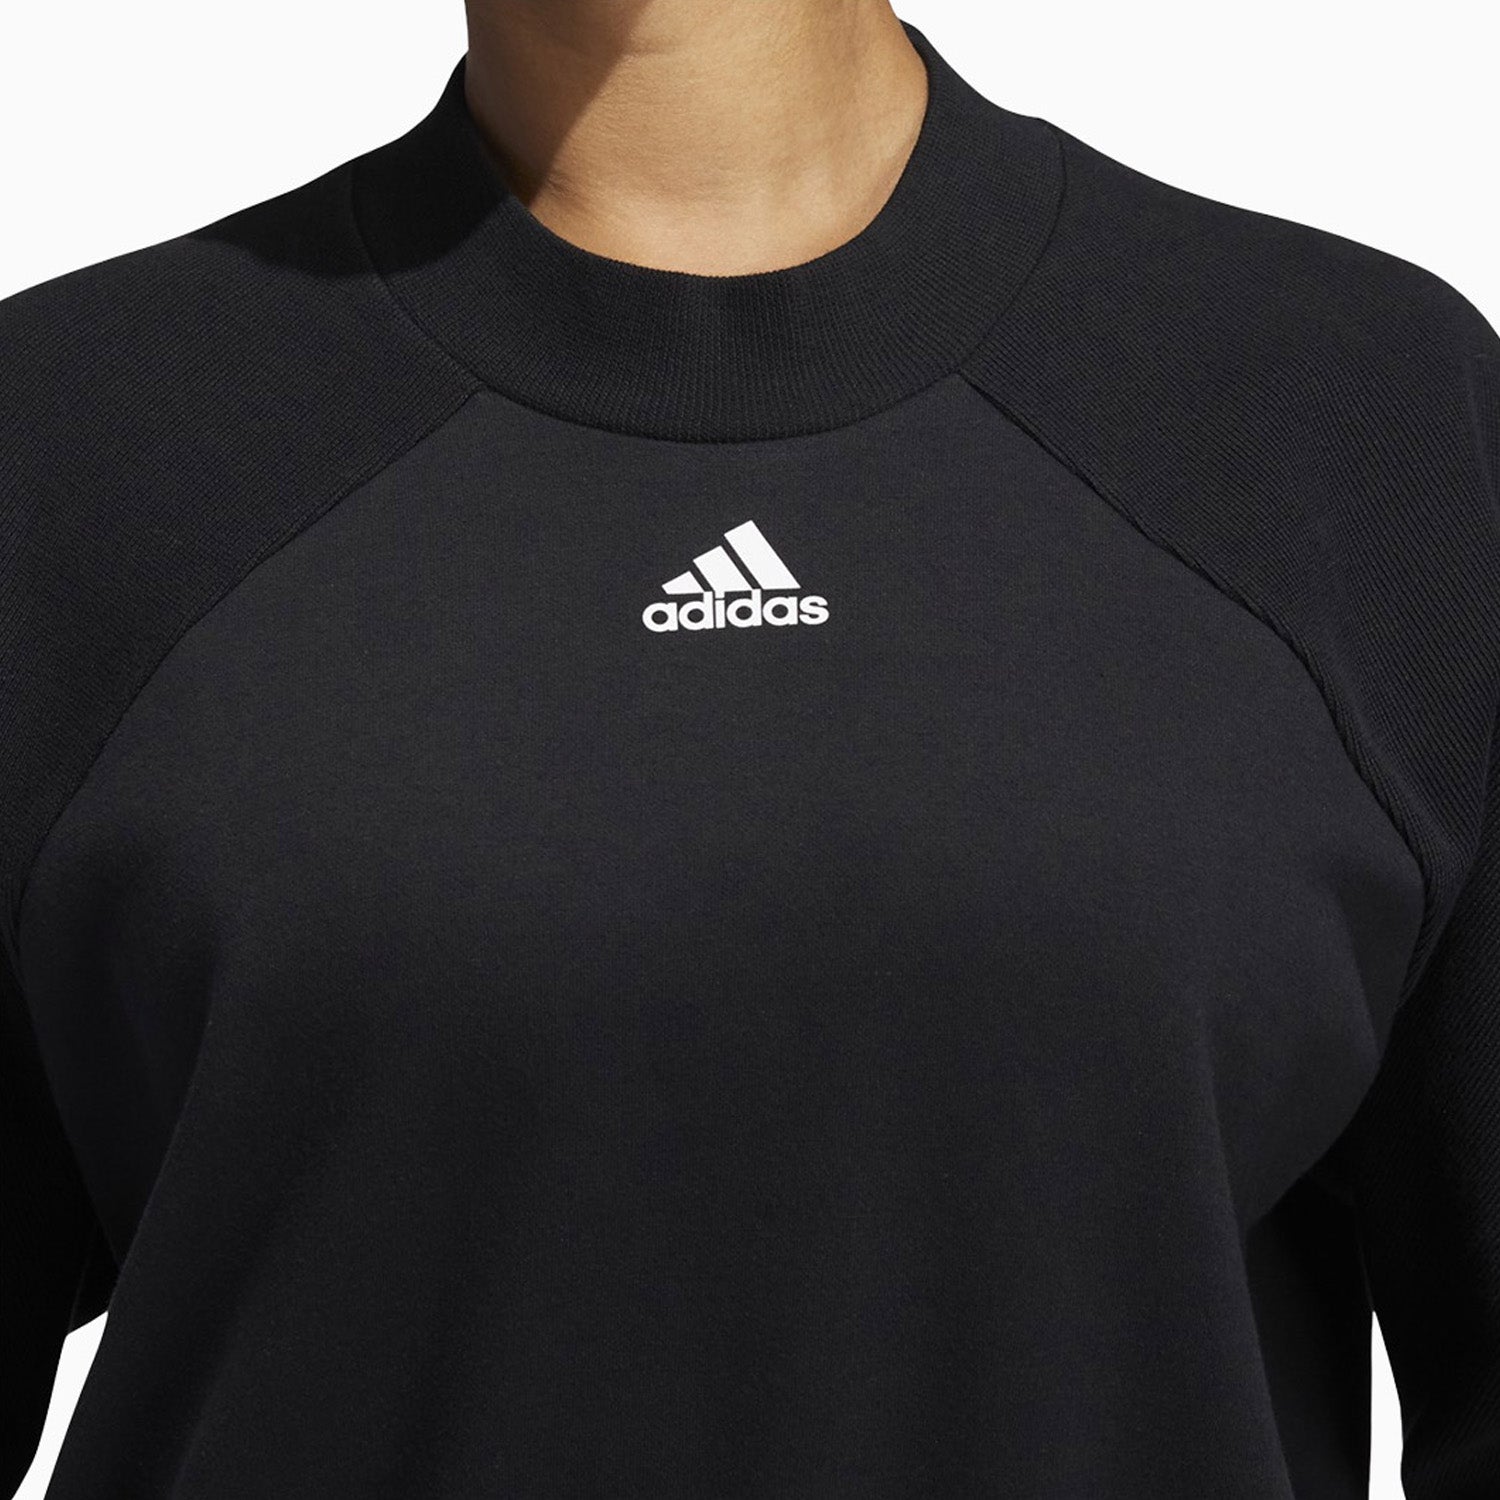 adidas-womens-black-rib-crew-sweatshirt-gr0426